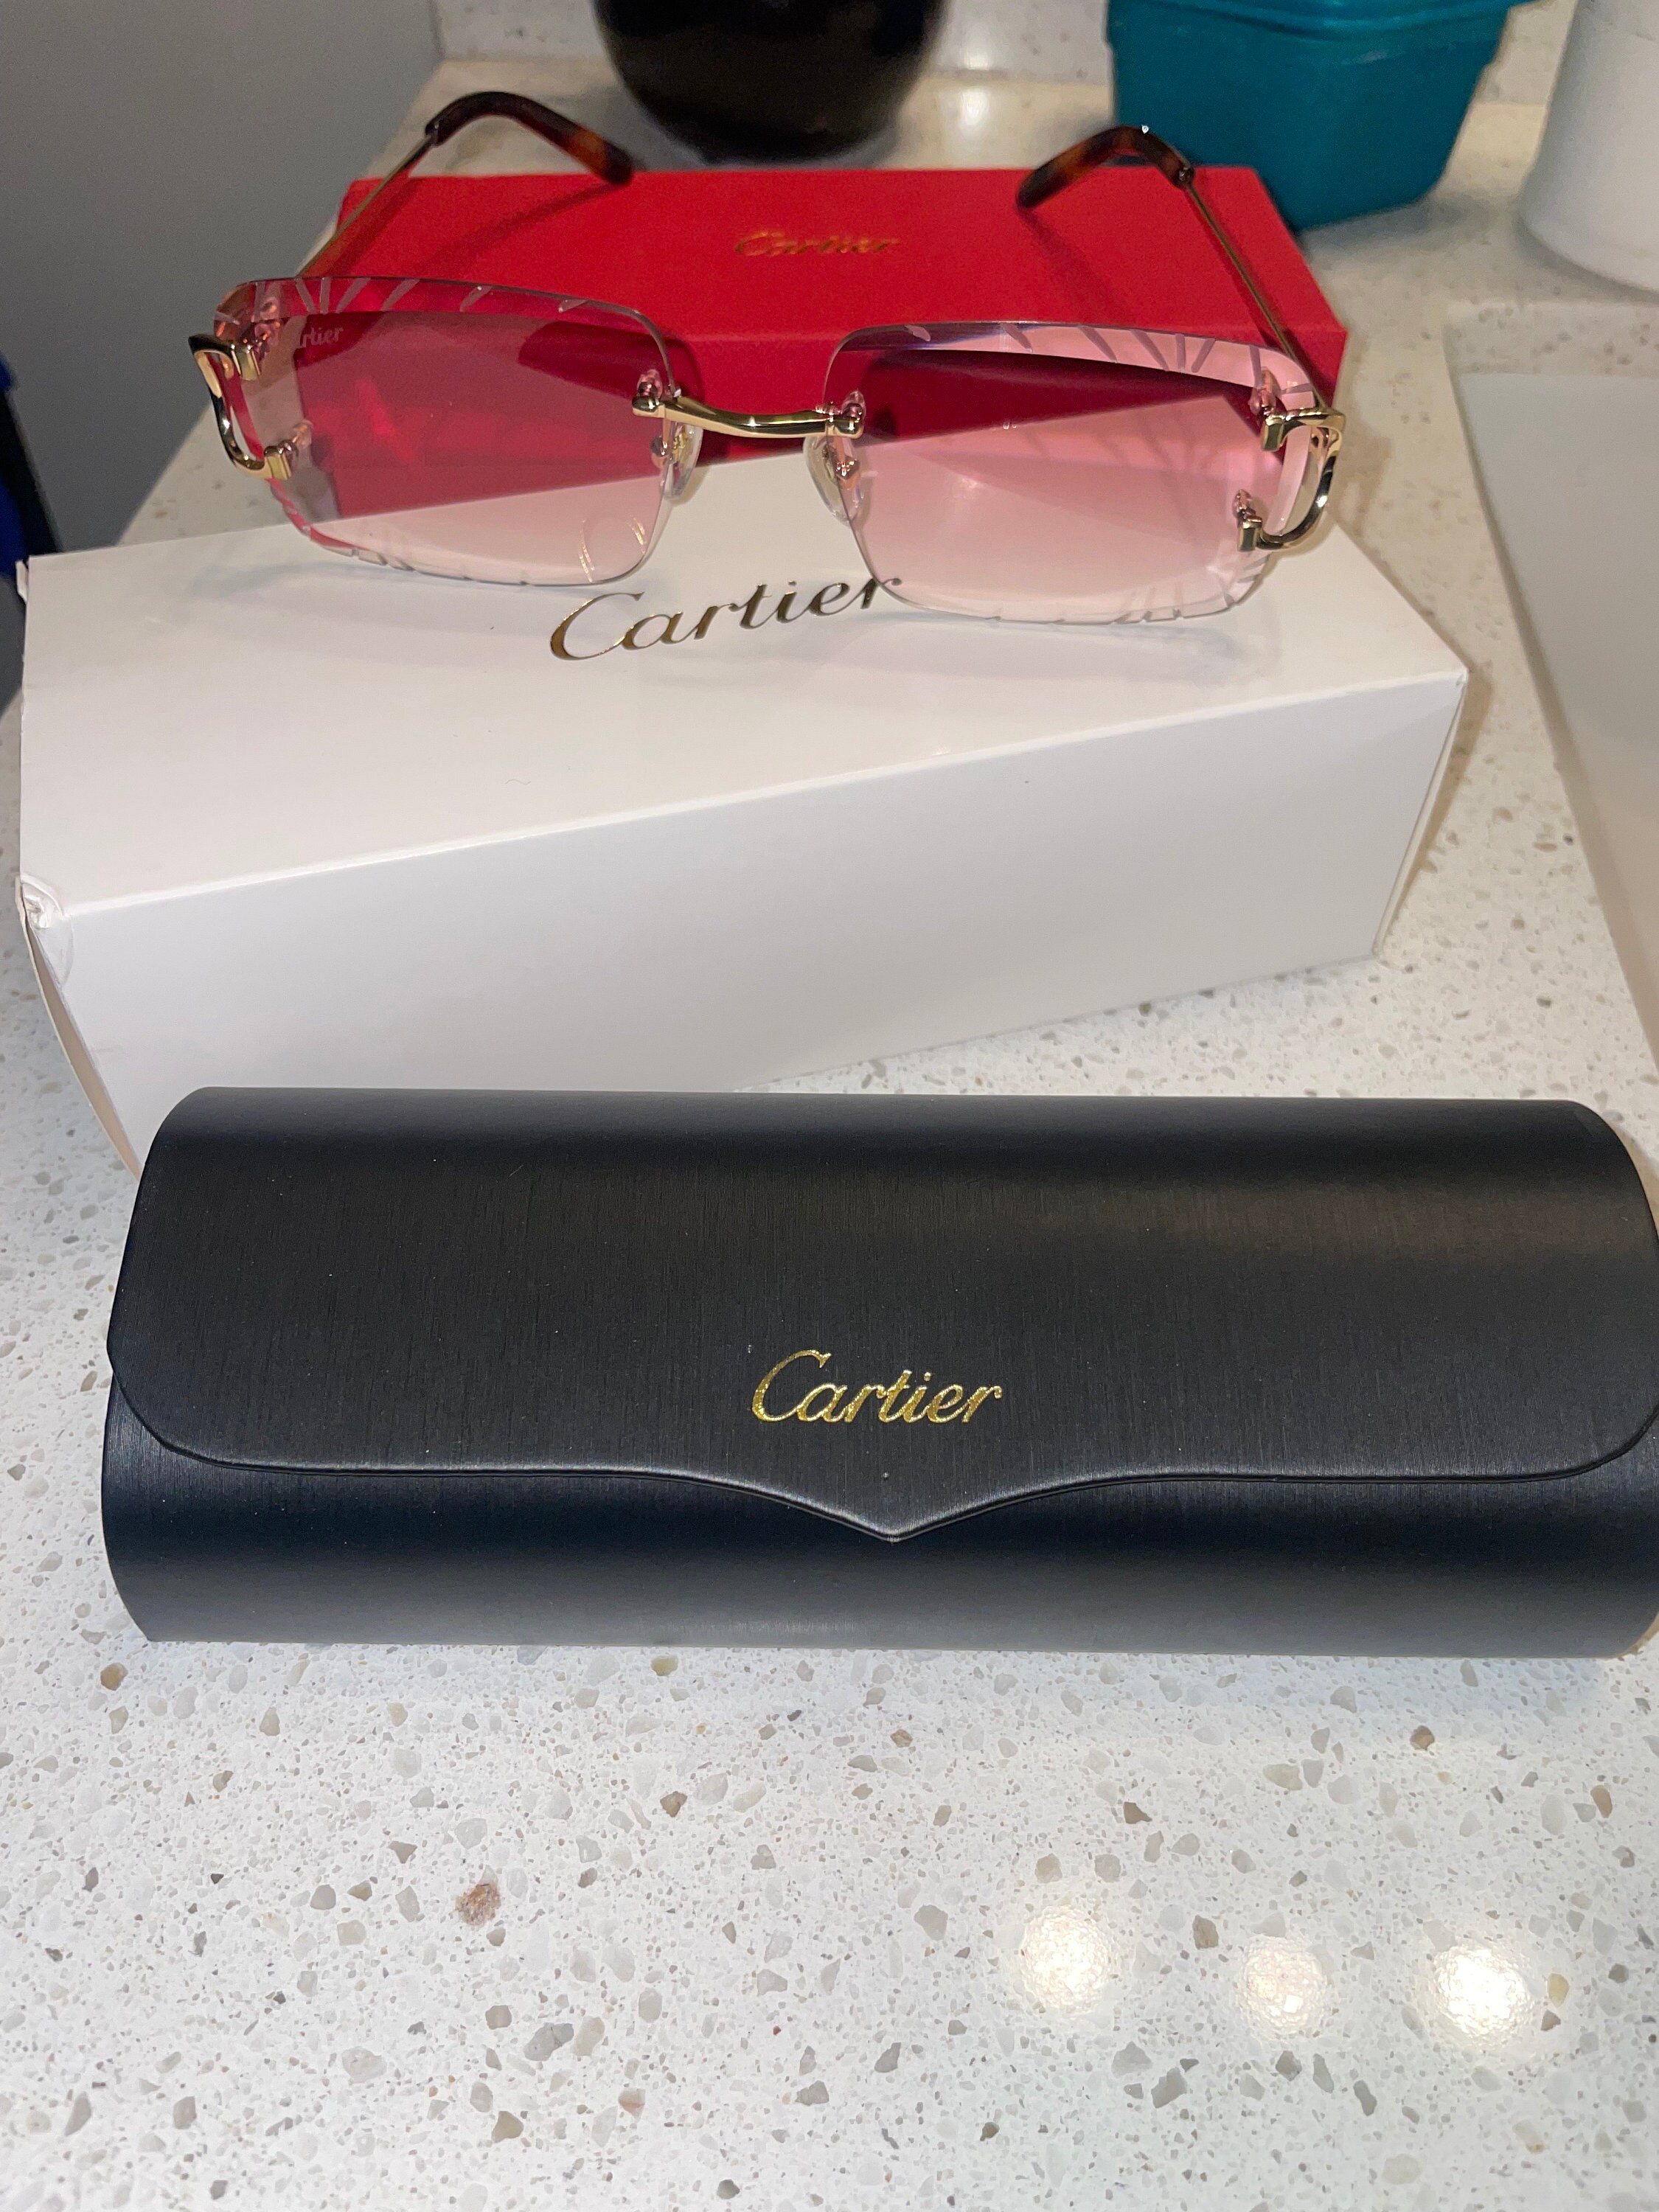 Cartier Left Nose Pad Arm Weld - Eyeglass Repair USA